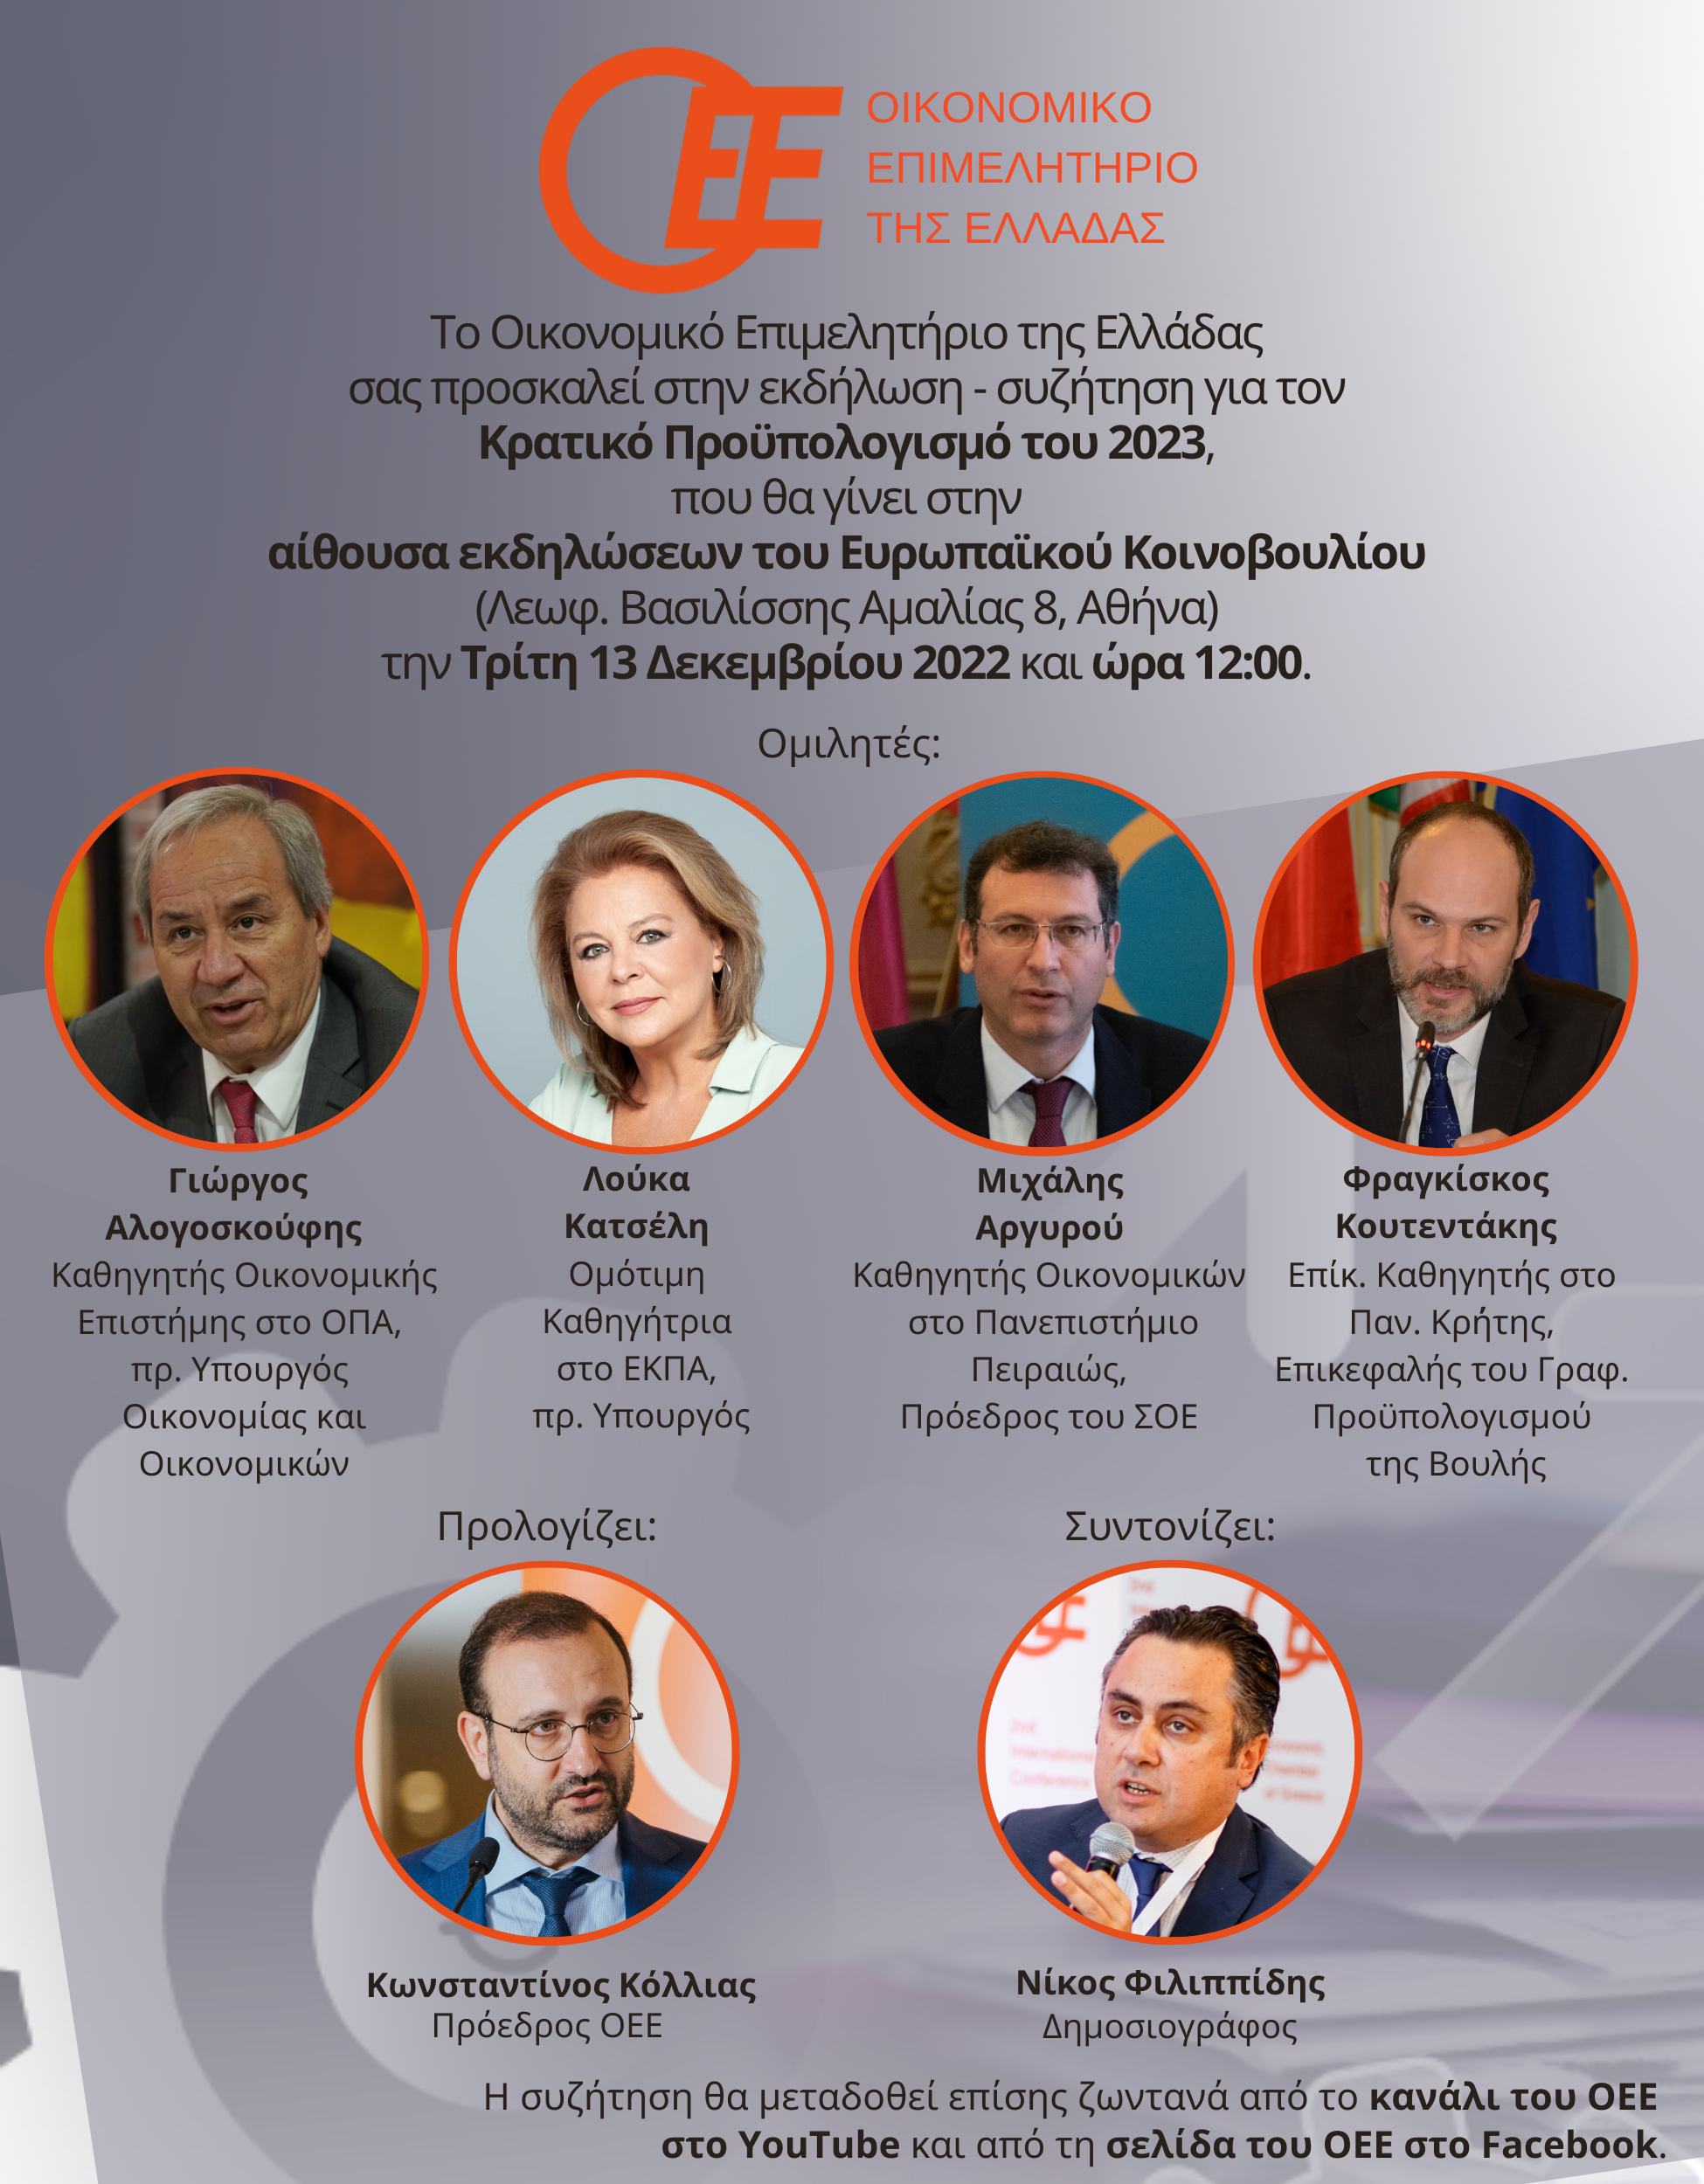 Eκδήλωση-συζήτηση, που διοργανώνει το Οικονομικό Επιμελητήριο Ελλάδος, με αφορμή την παρουσίαση των θέσεών του για τον Κρατικό Προϋπολογισμό του 2023